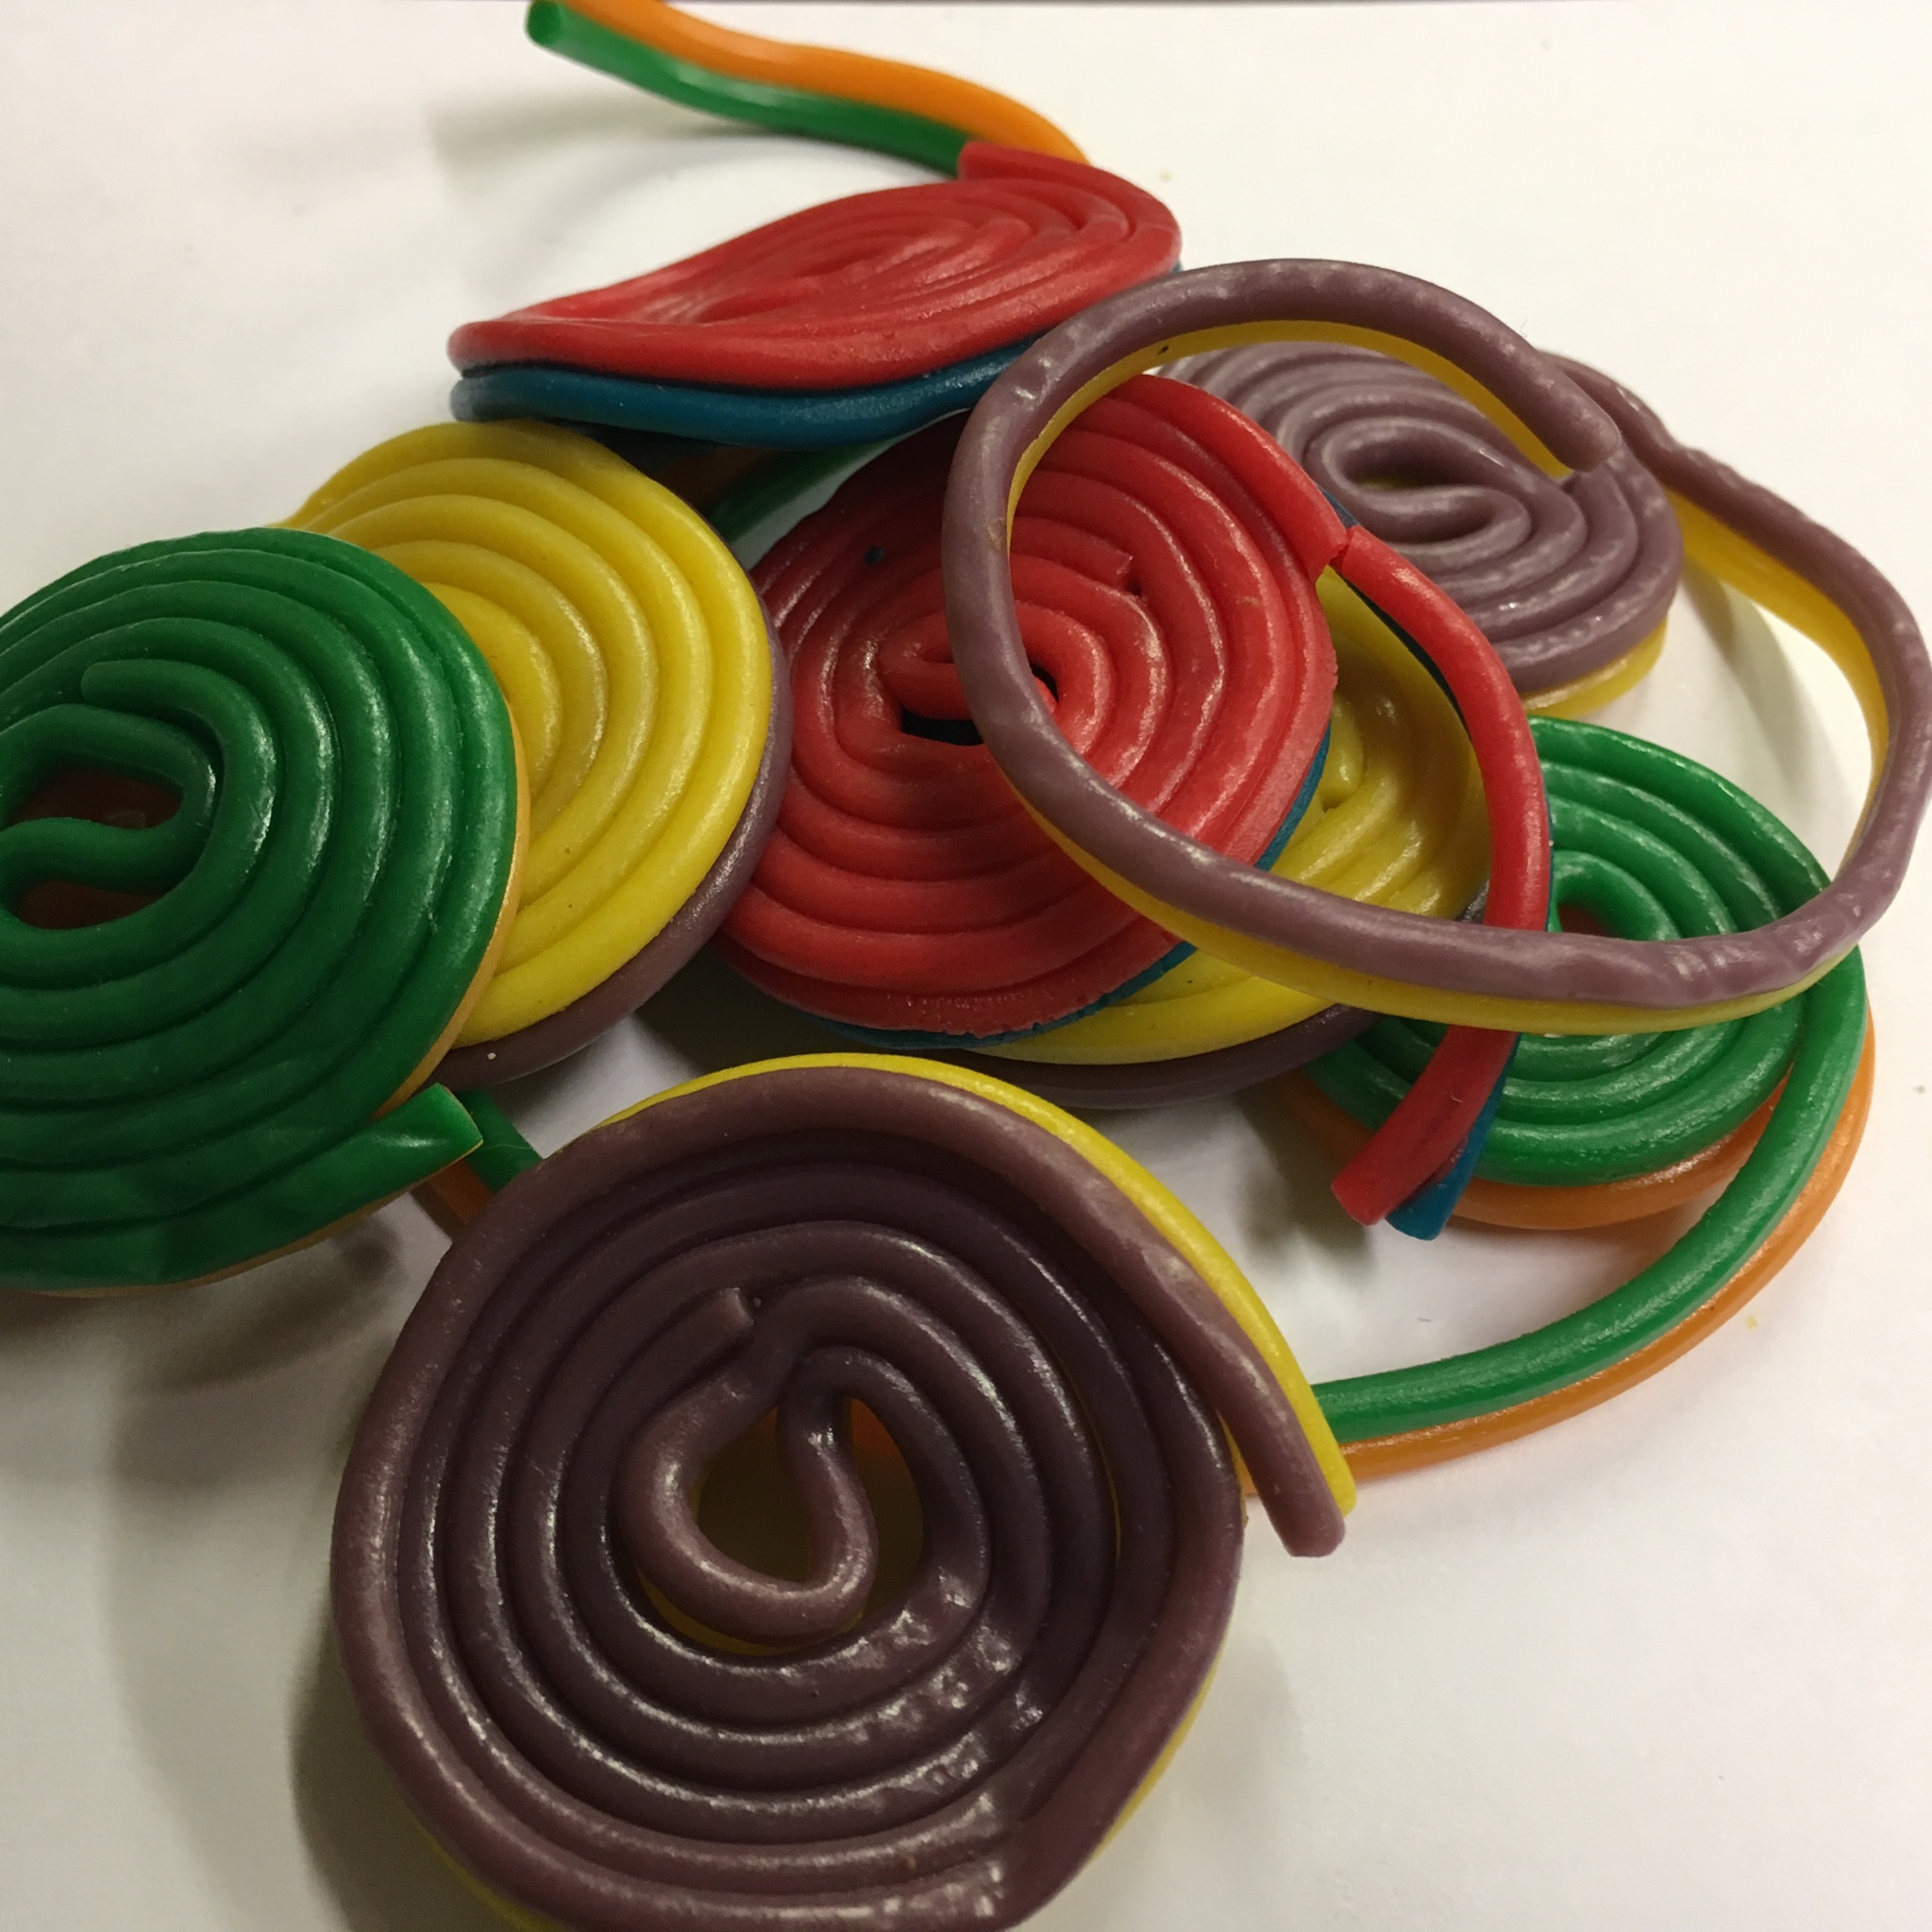 Rainbow ropes of licorice in wheels